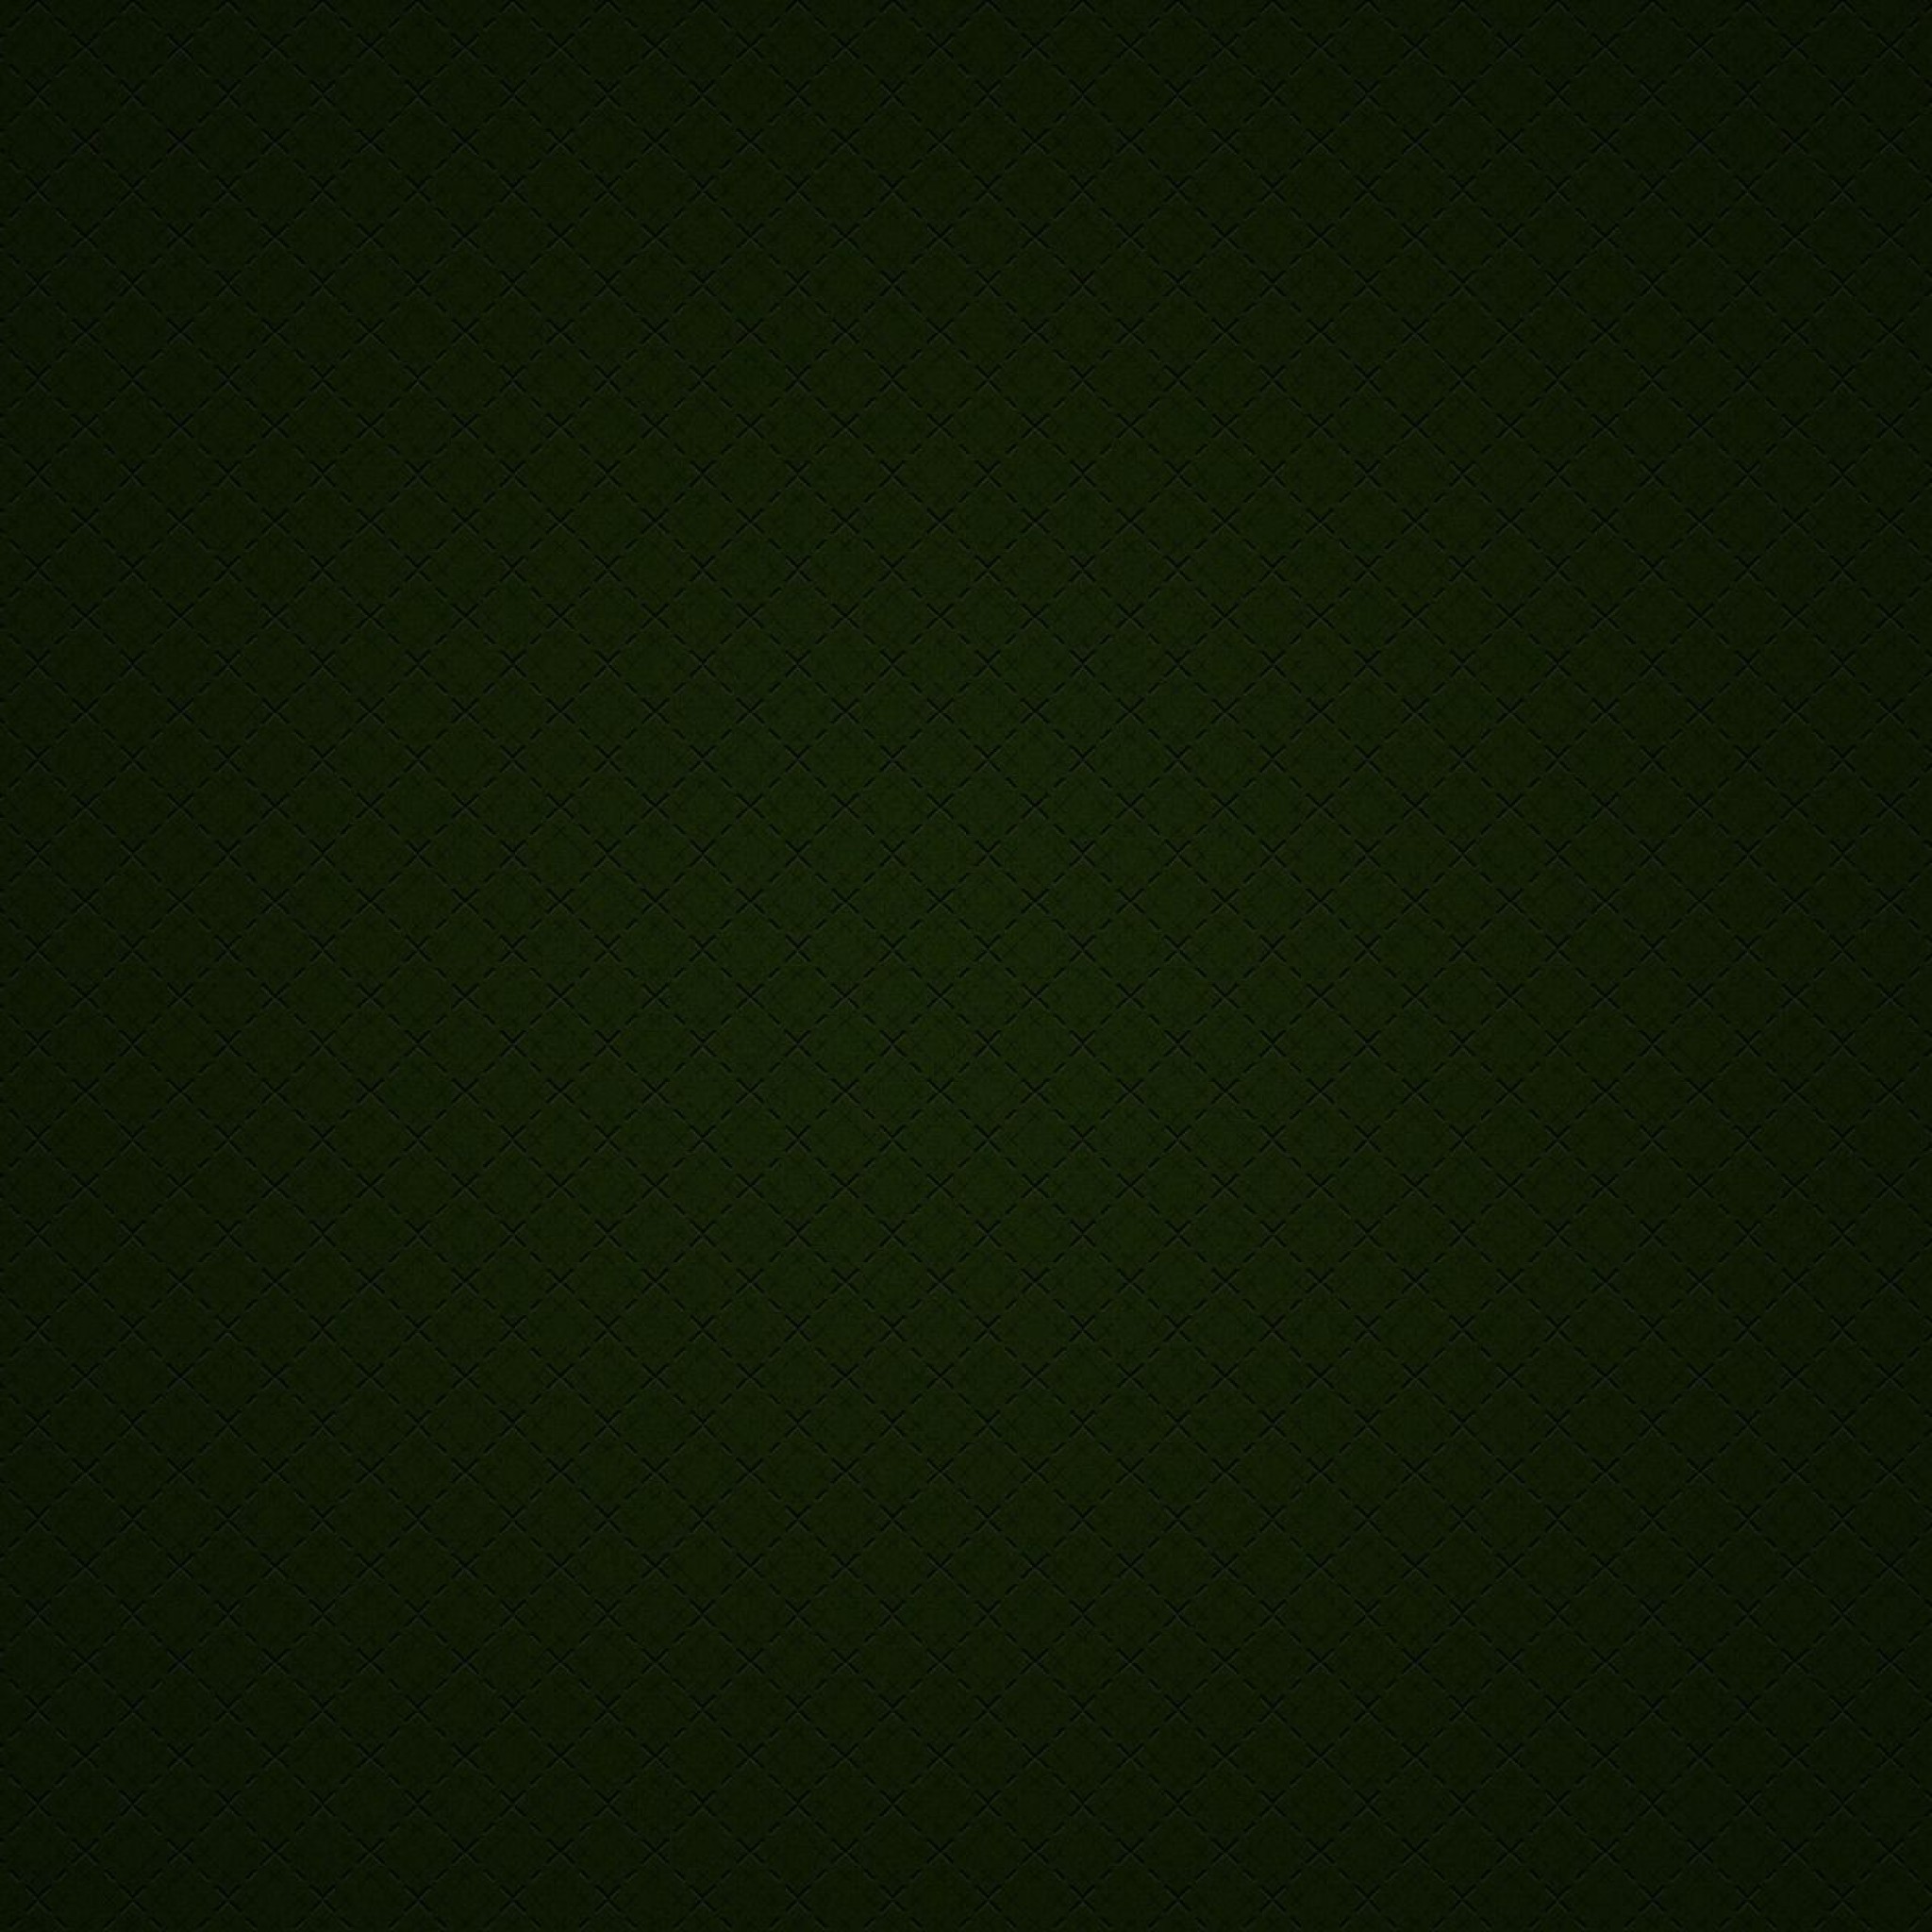 Green Background iPad Air Wallpaper iPhone